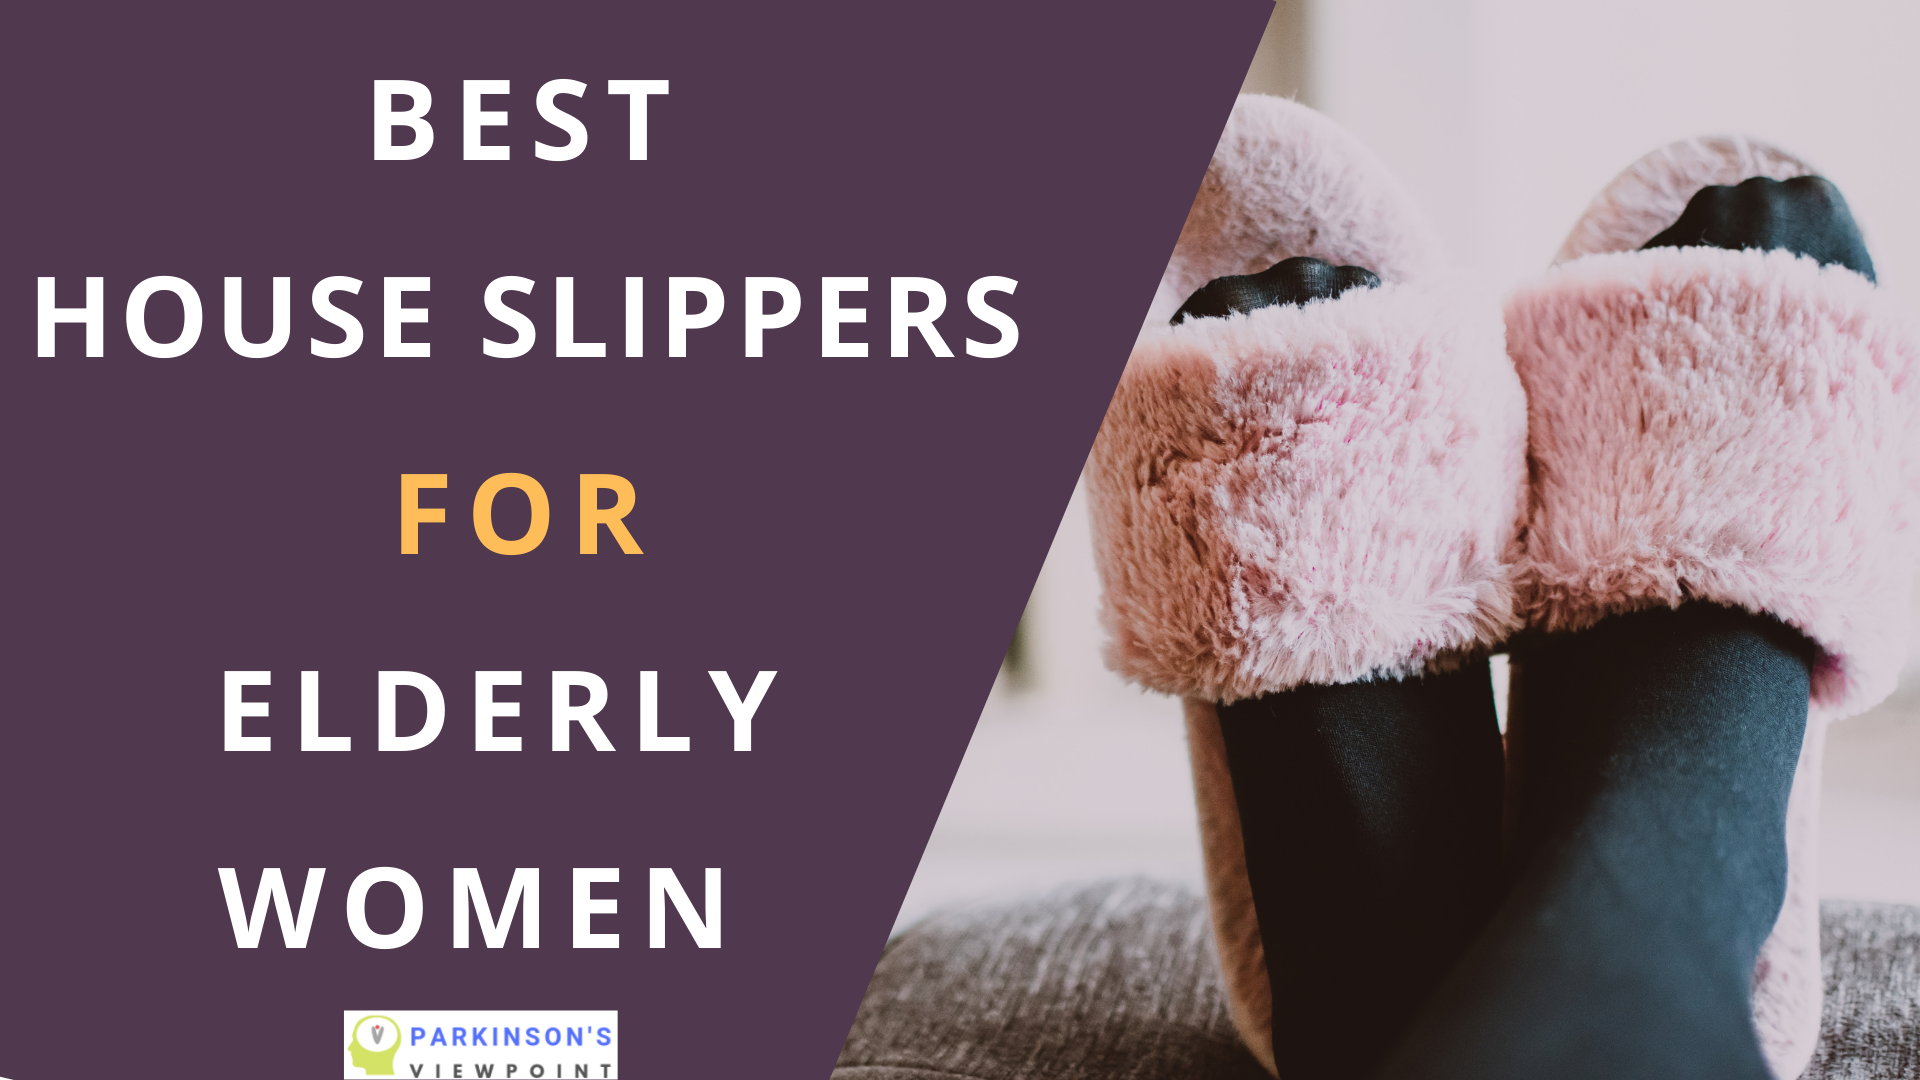 Best slippers for elderly women | Parkinson's Viewpoint